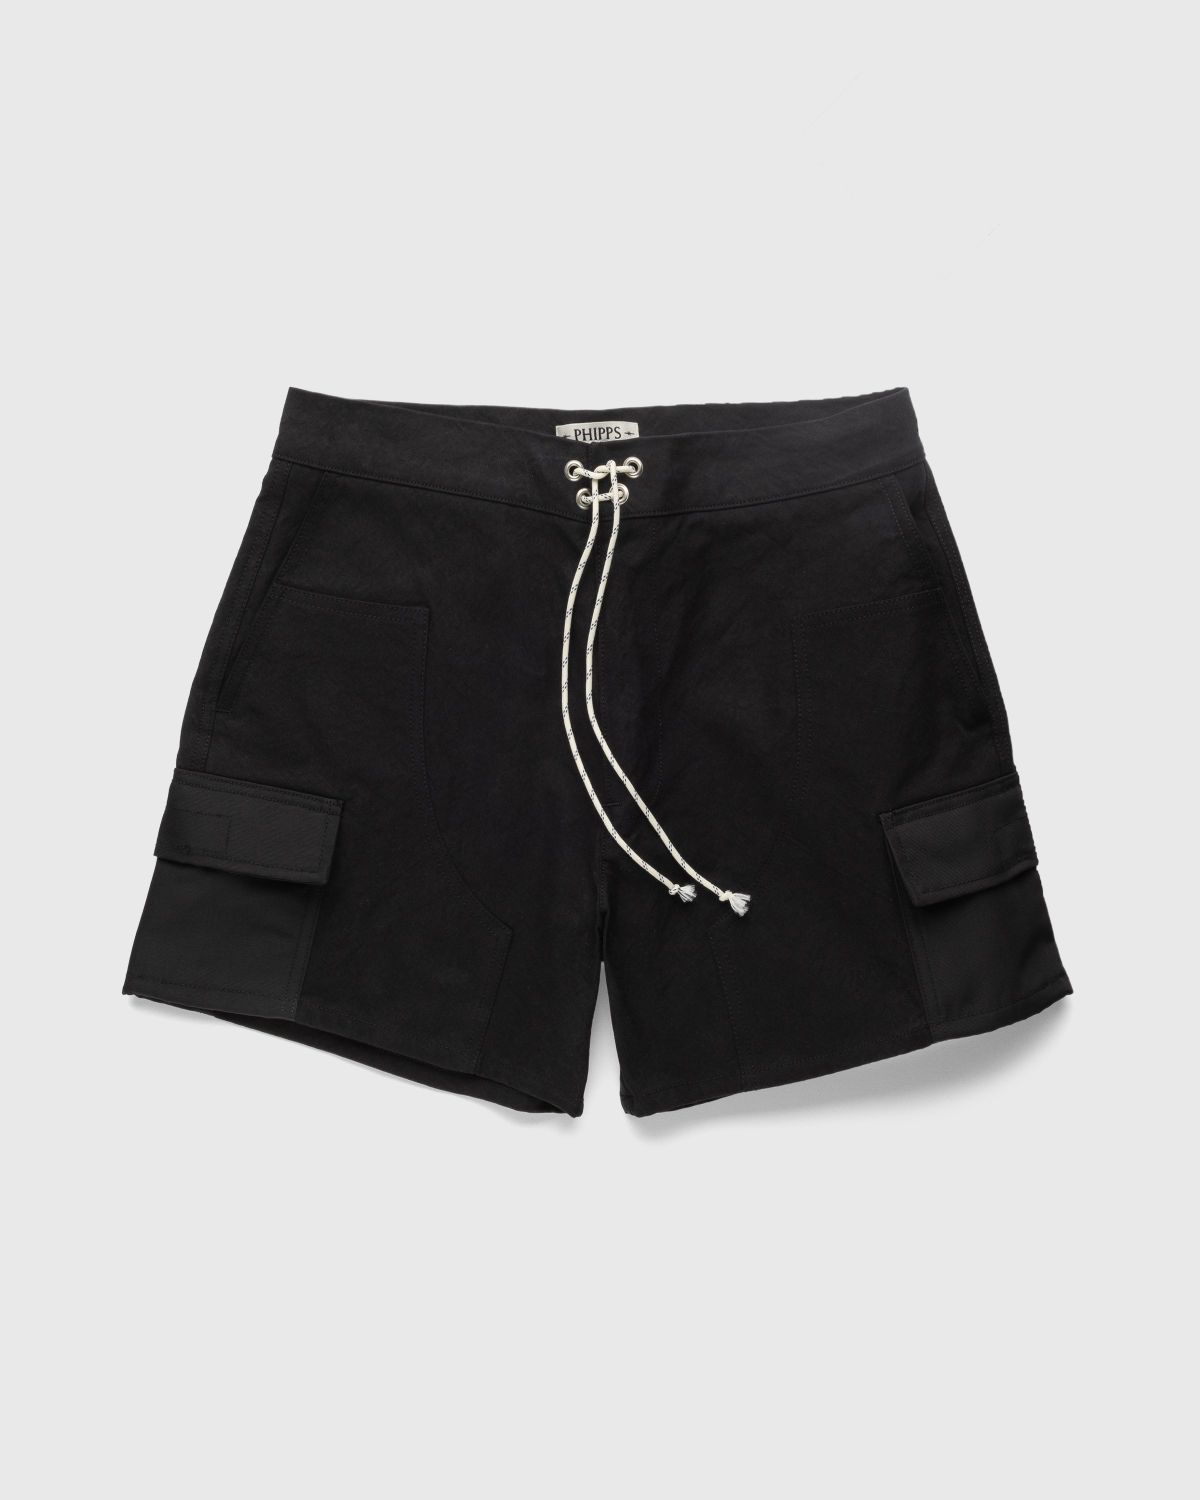 Phipps – Action Shorts Ranger Cotton Black - Shorts - Black - Image 1